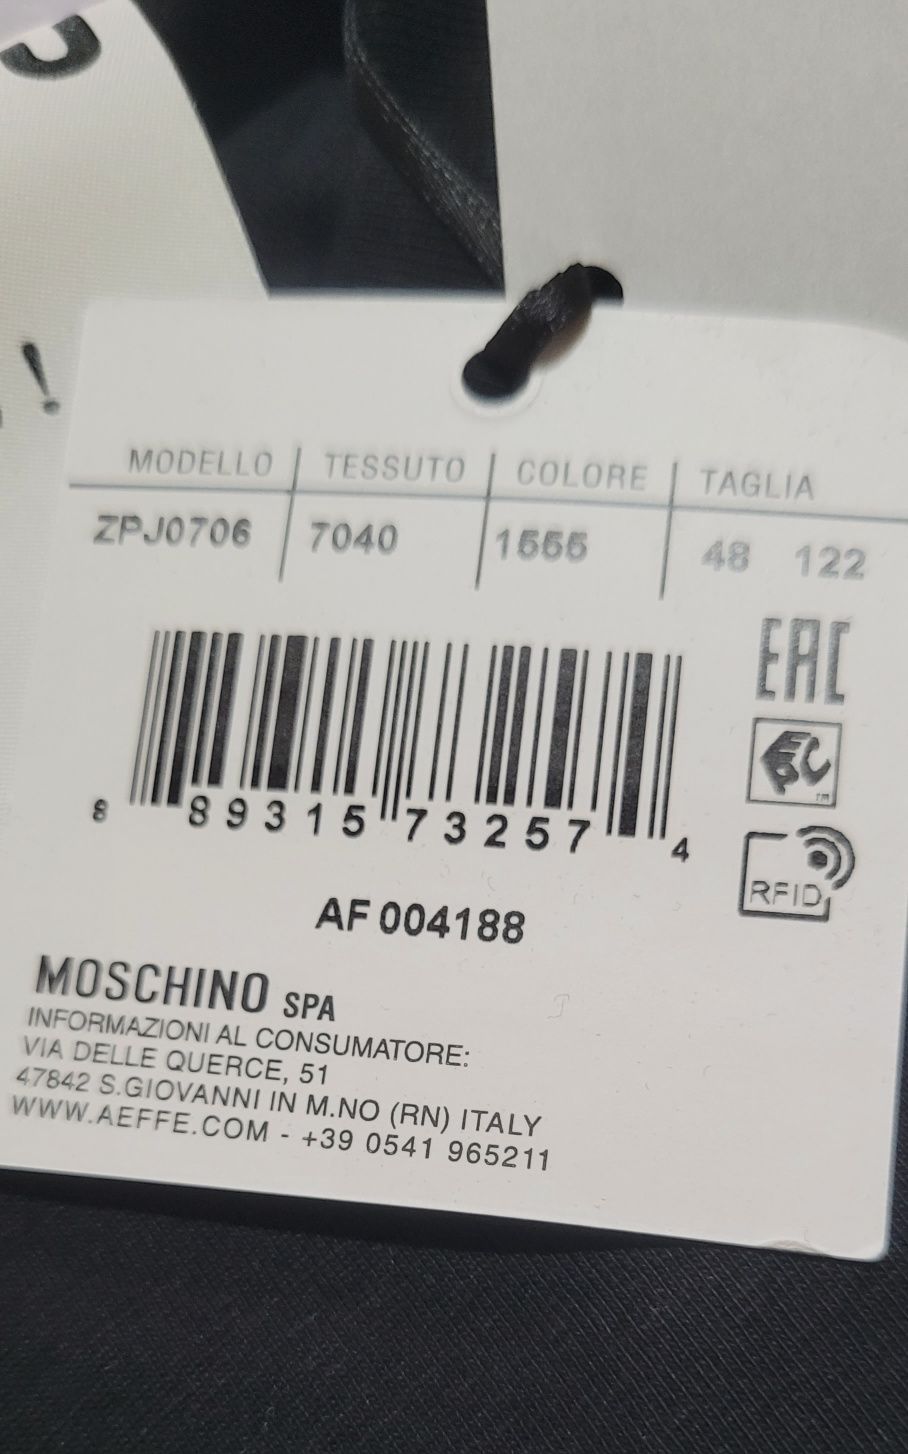 Tricou Moschino Milano